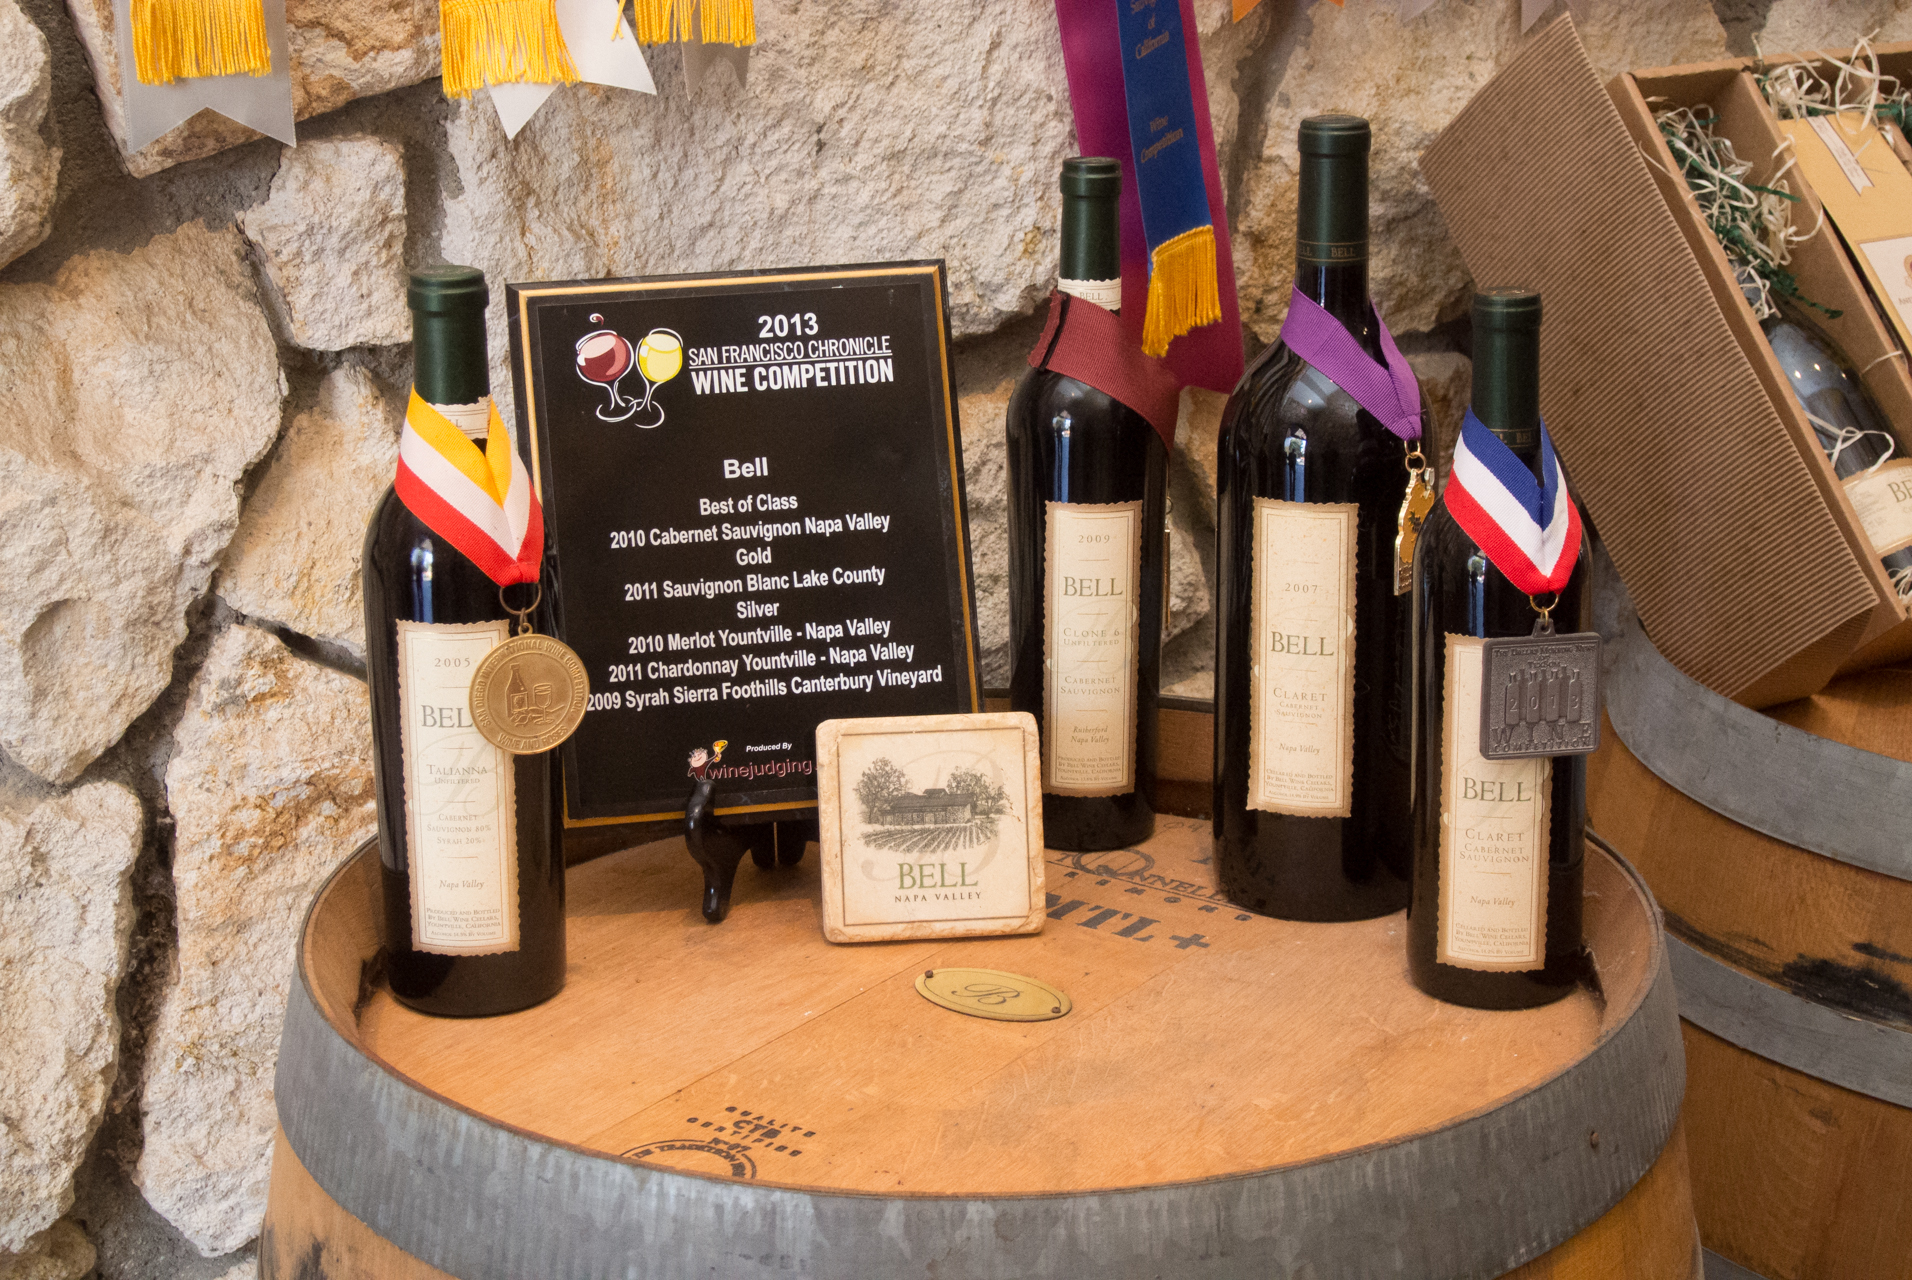 https://www.chefbikeski.com/wp-content/uploads/2013/12/bell-winery-awards-italiaoutdoors-food-and-wine-bike-tours-tuscany-italy_.jpg